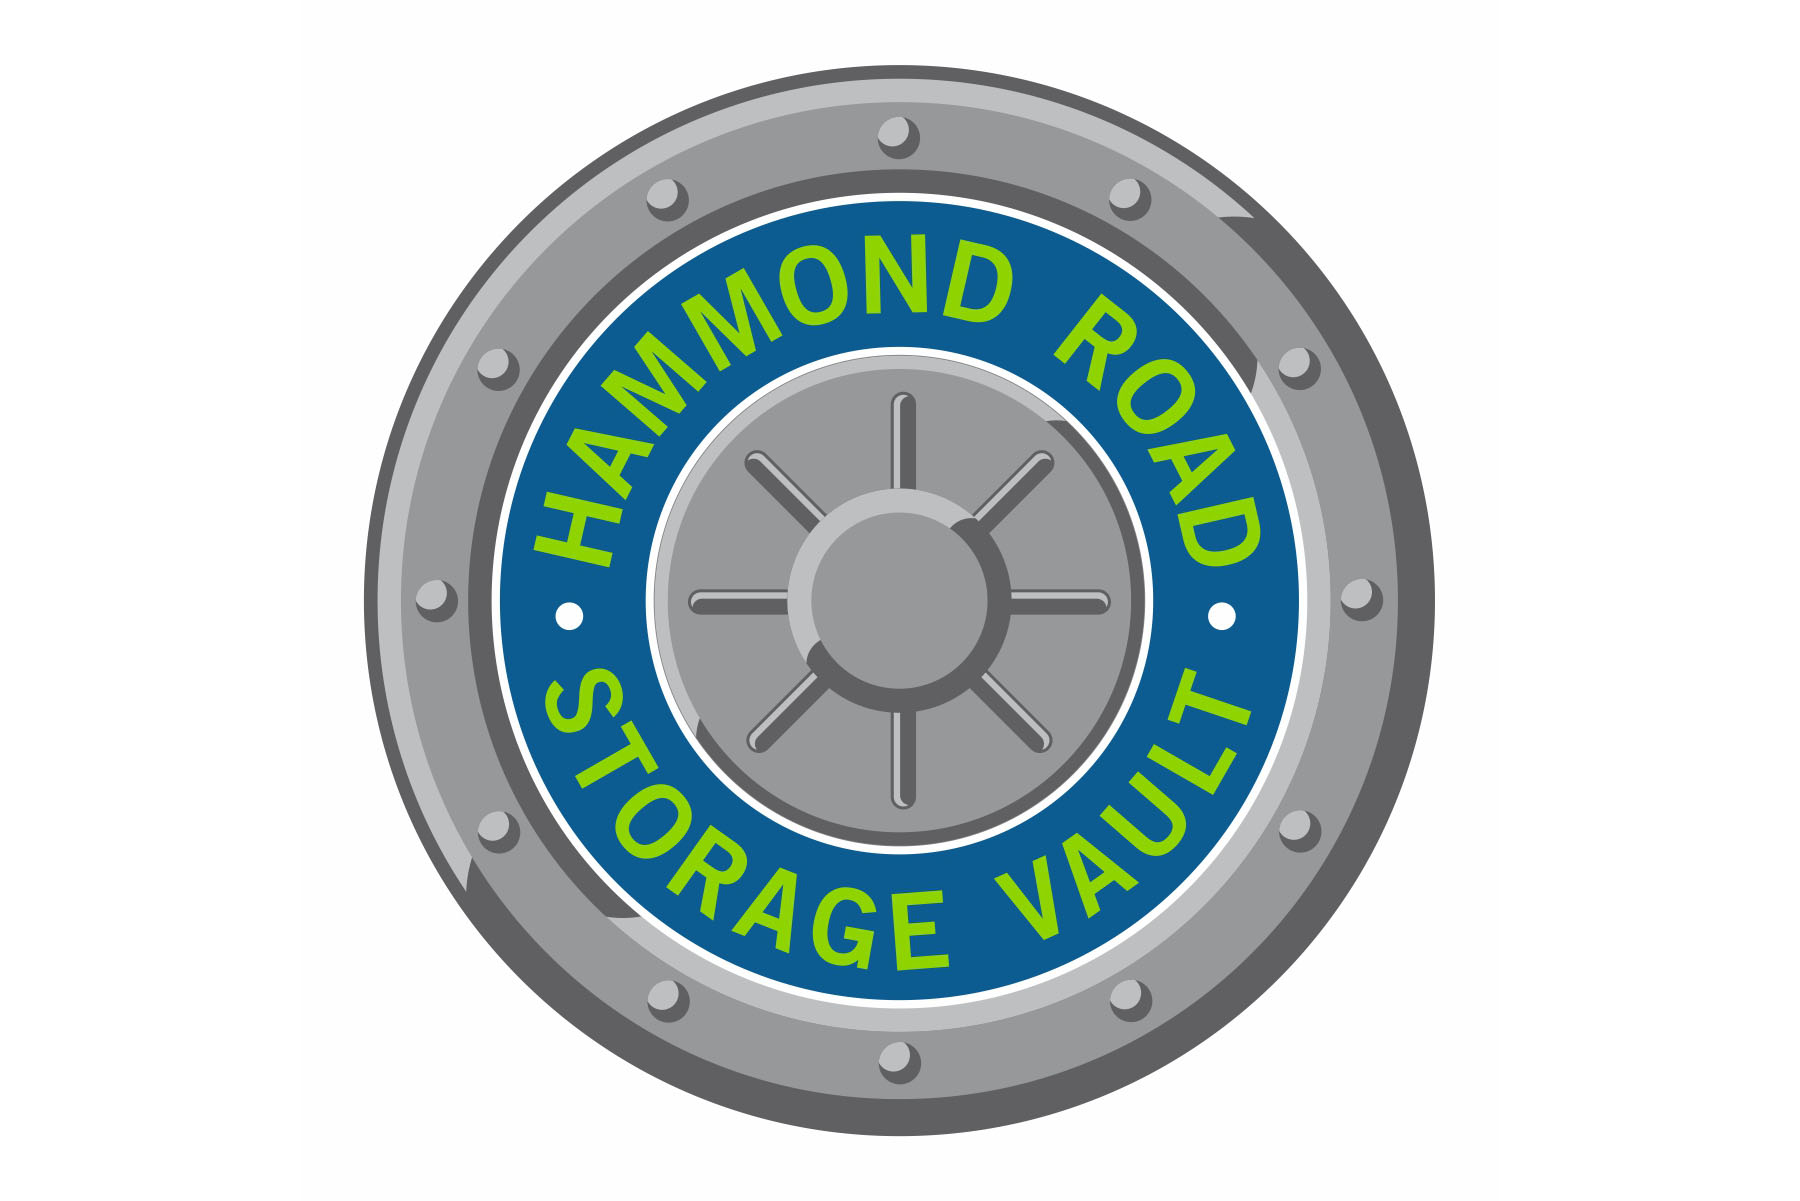 Hammond Road Storage Vault Logo resized